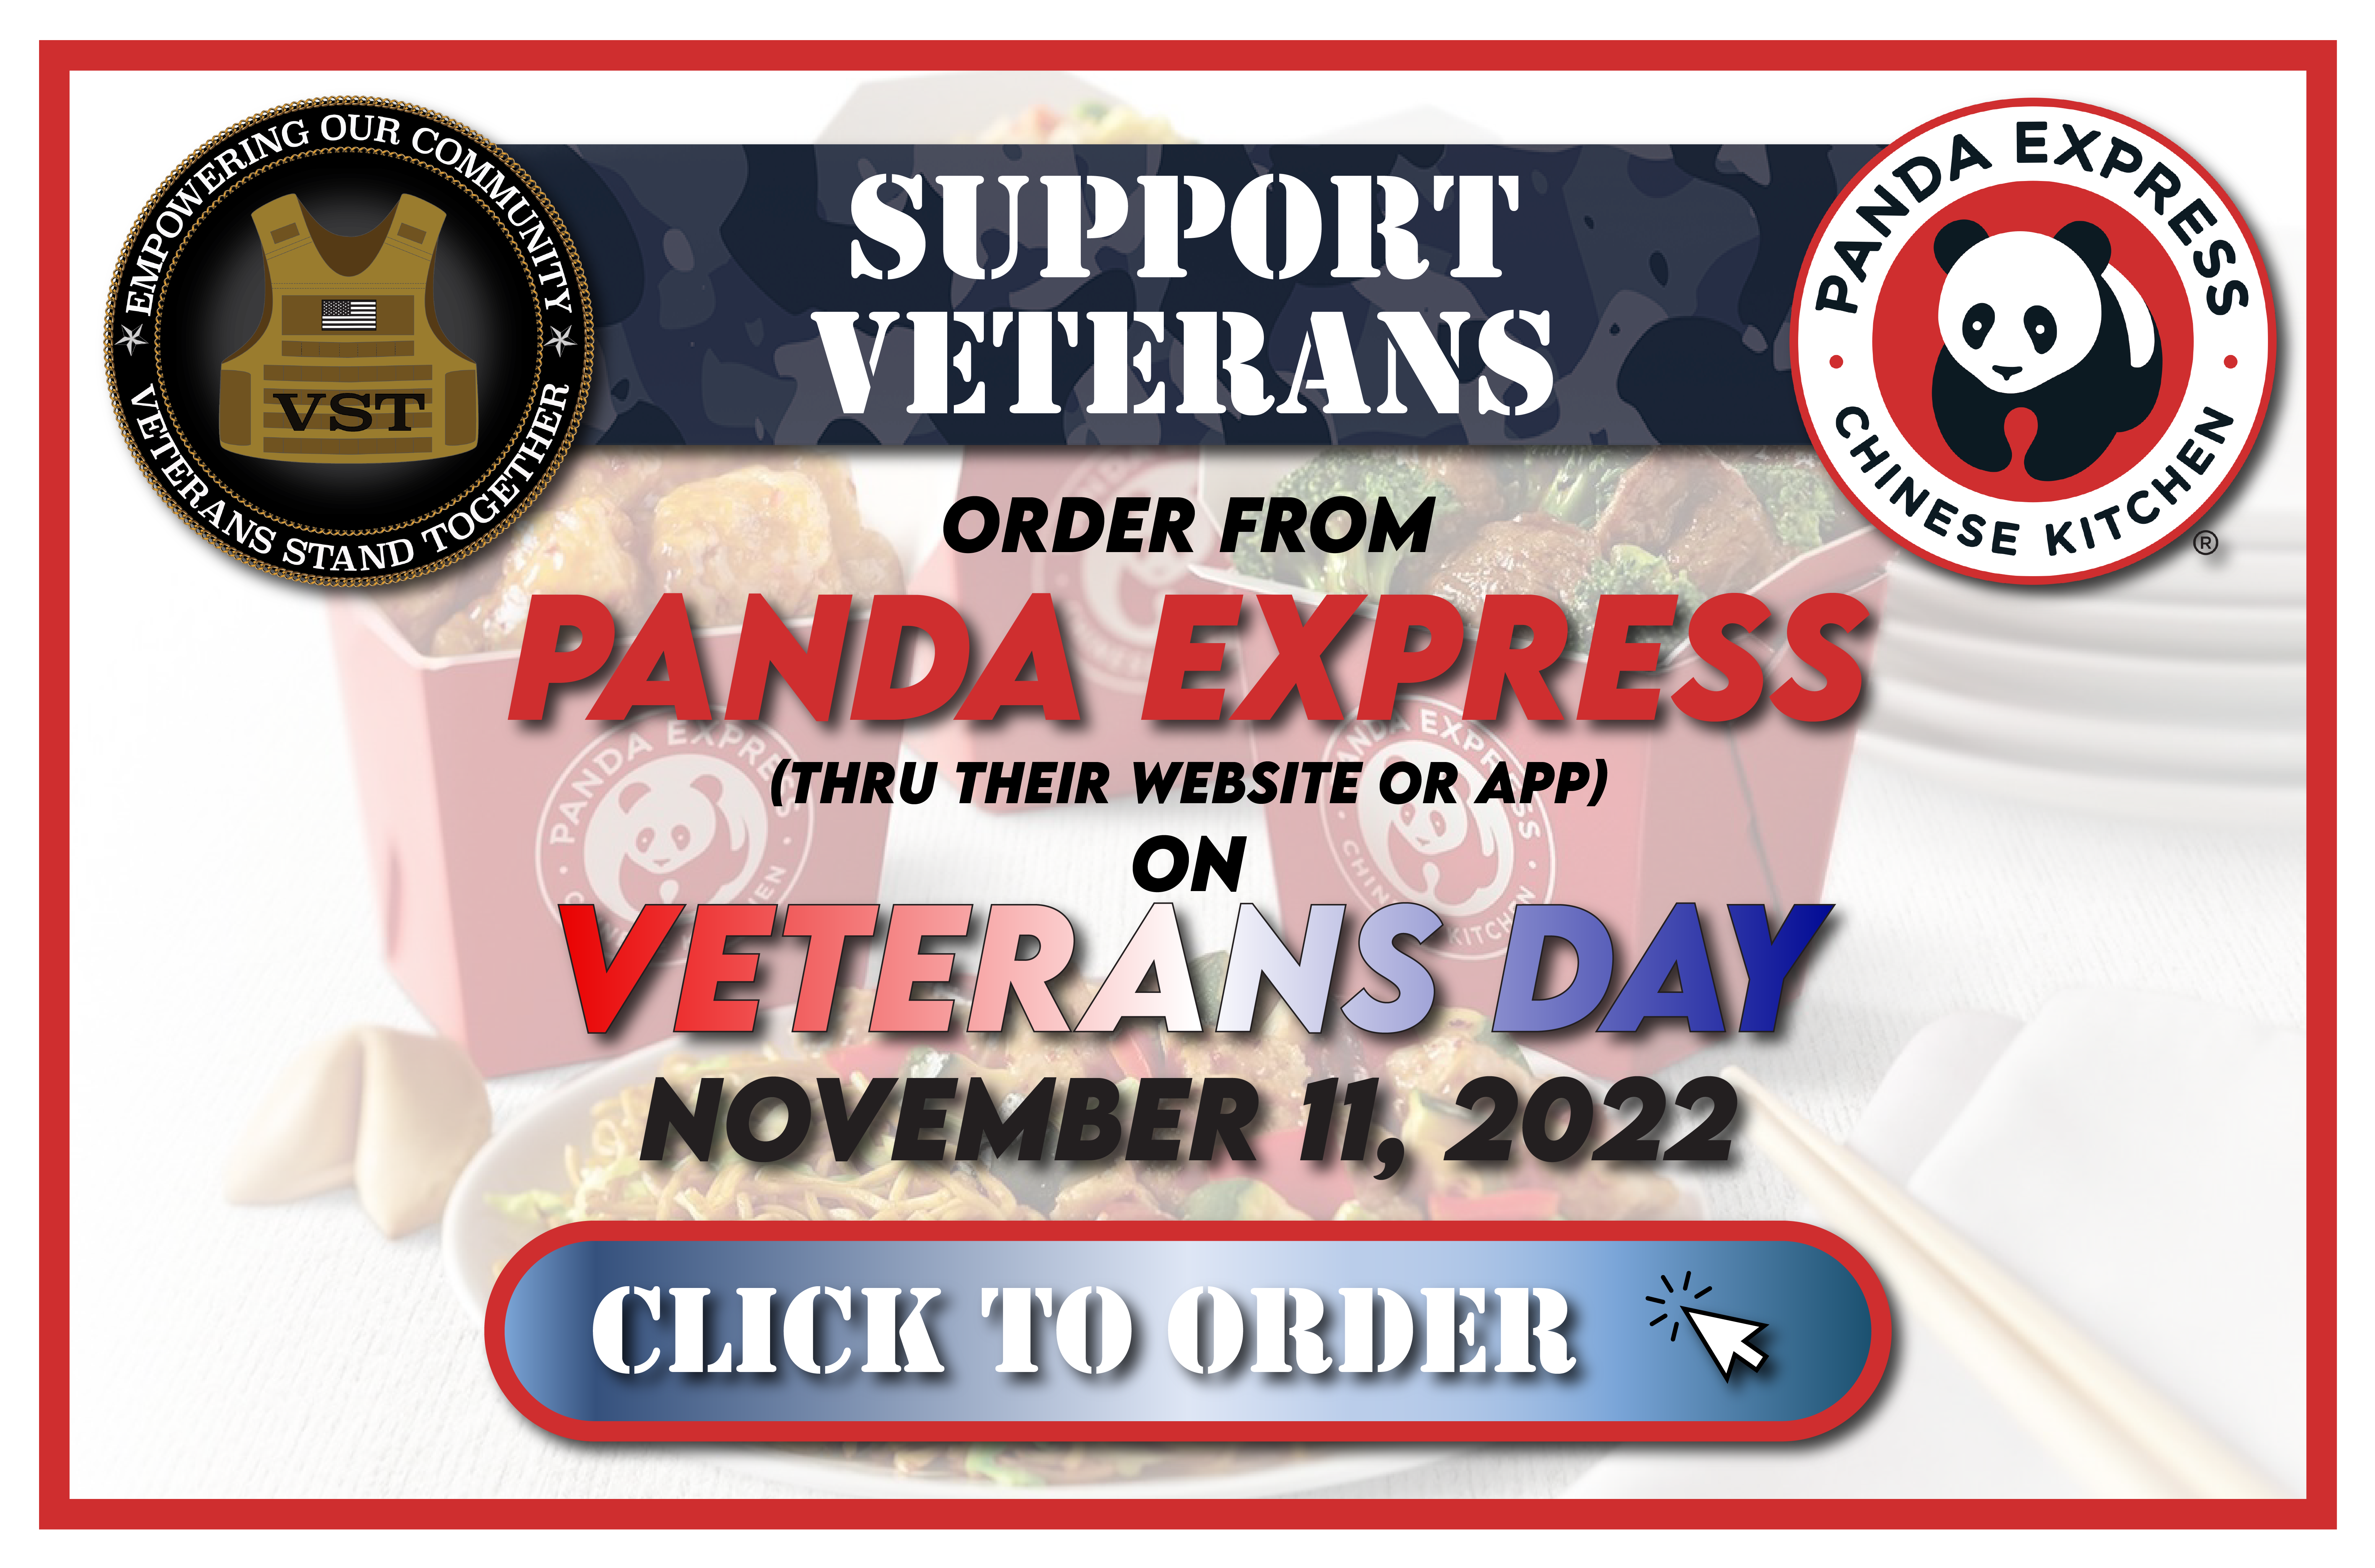 Panda Express Veterans Fundraising Event!